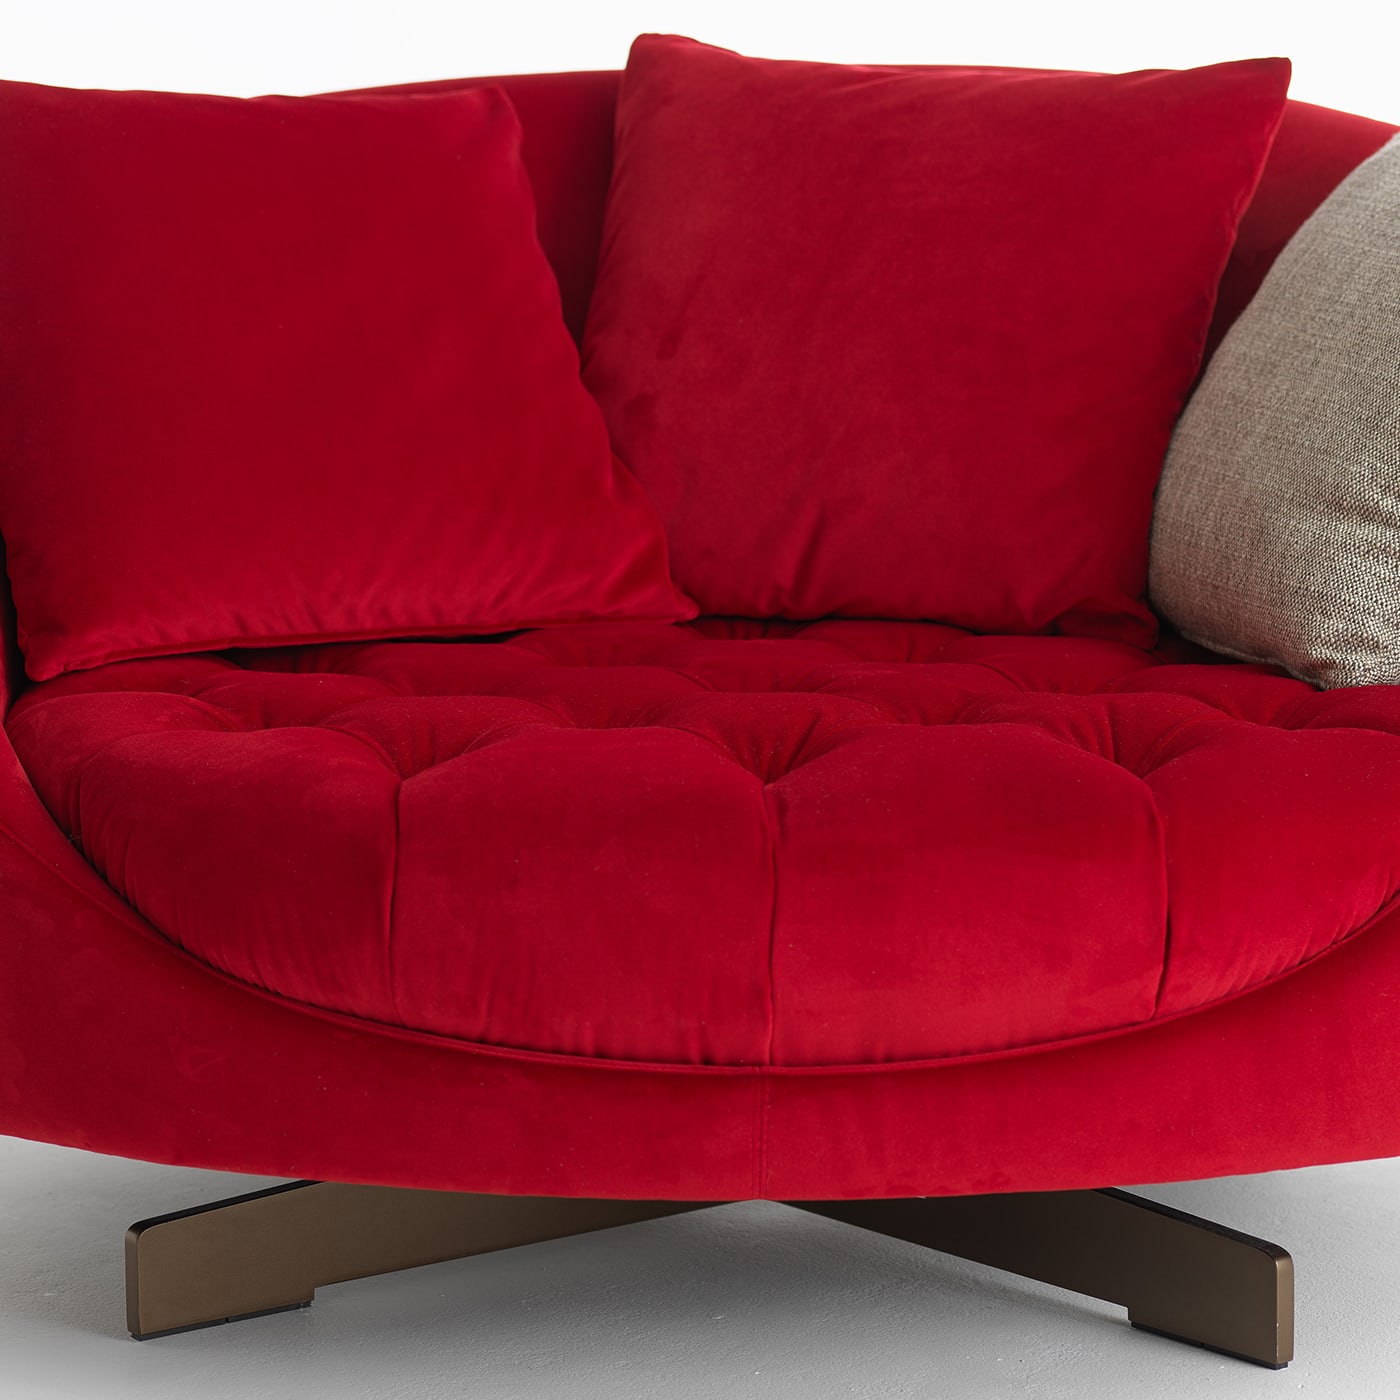 Hill Red sofa by Studio MA Albedo